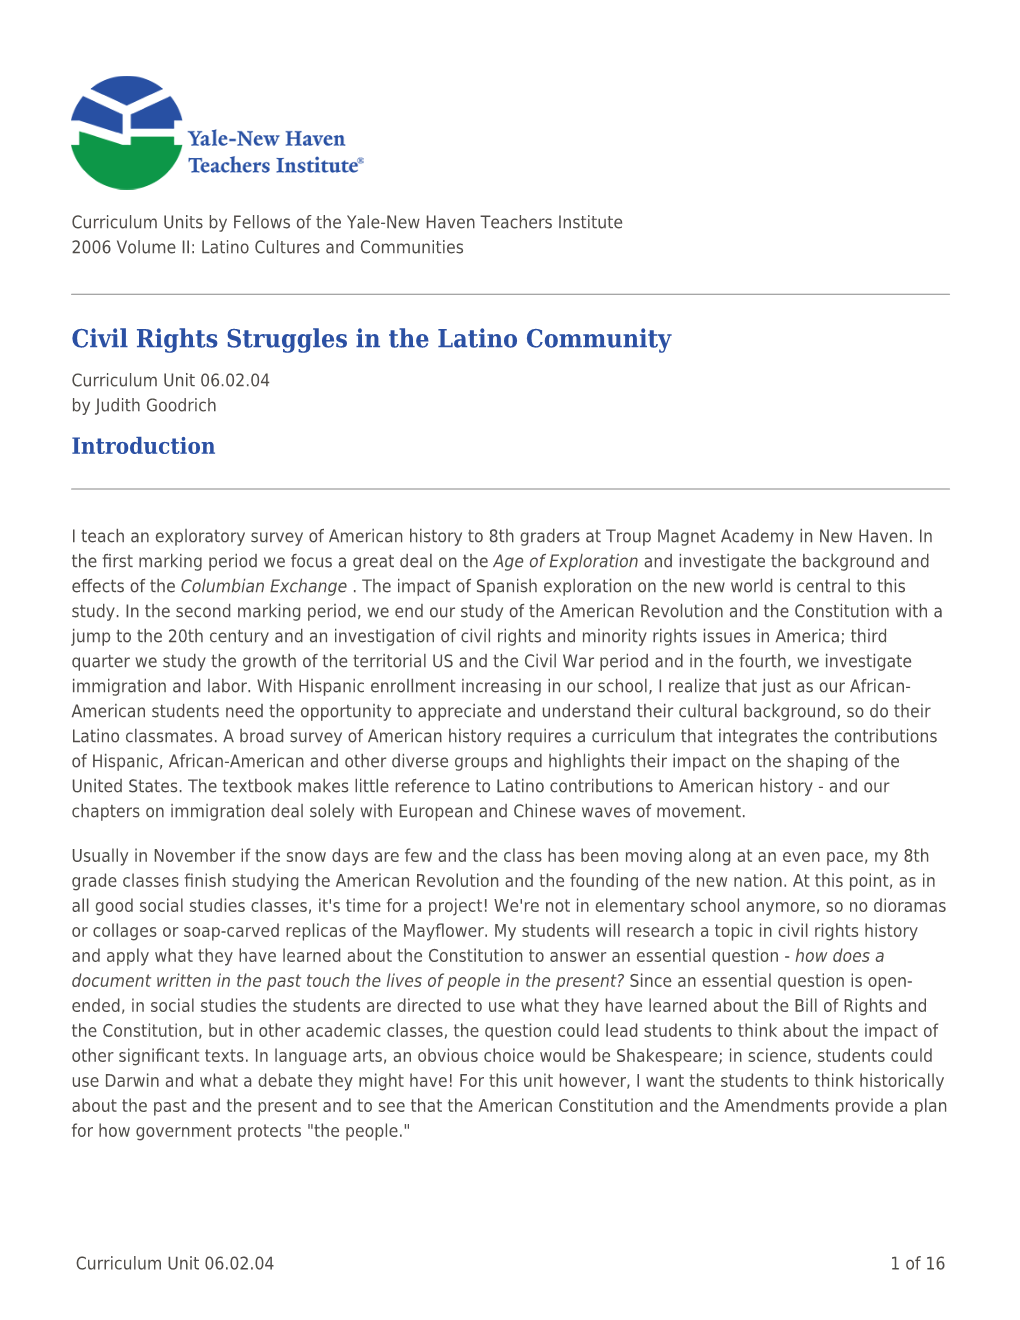 Civil Rights Struggles in the Latino Community